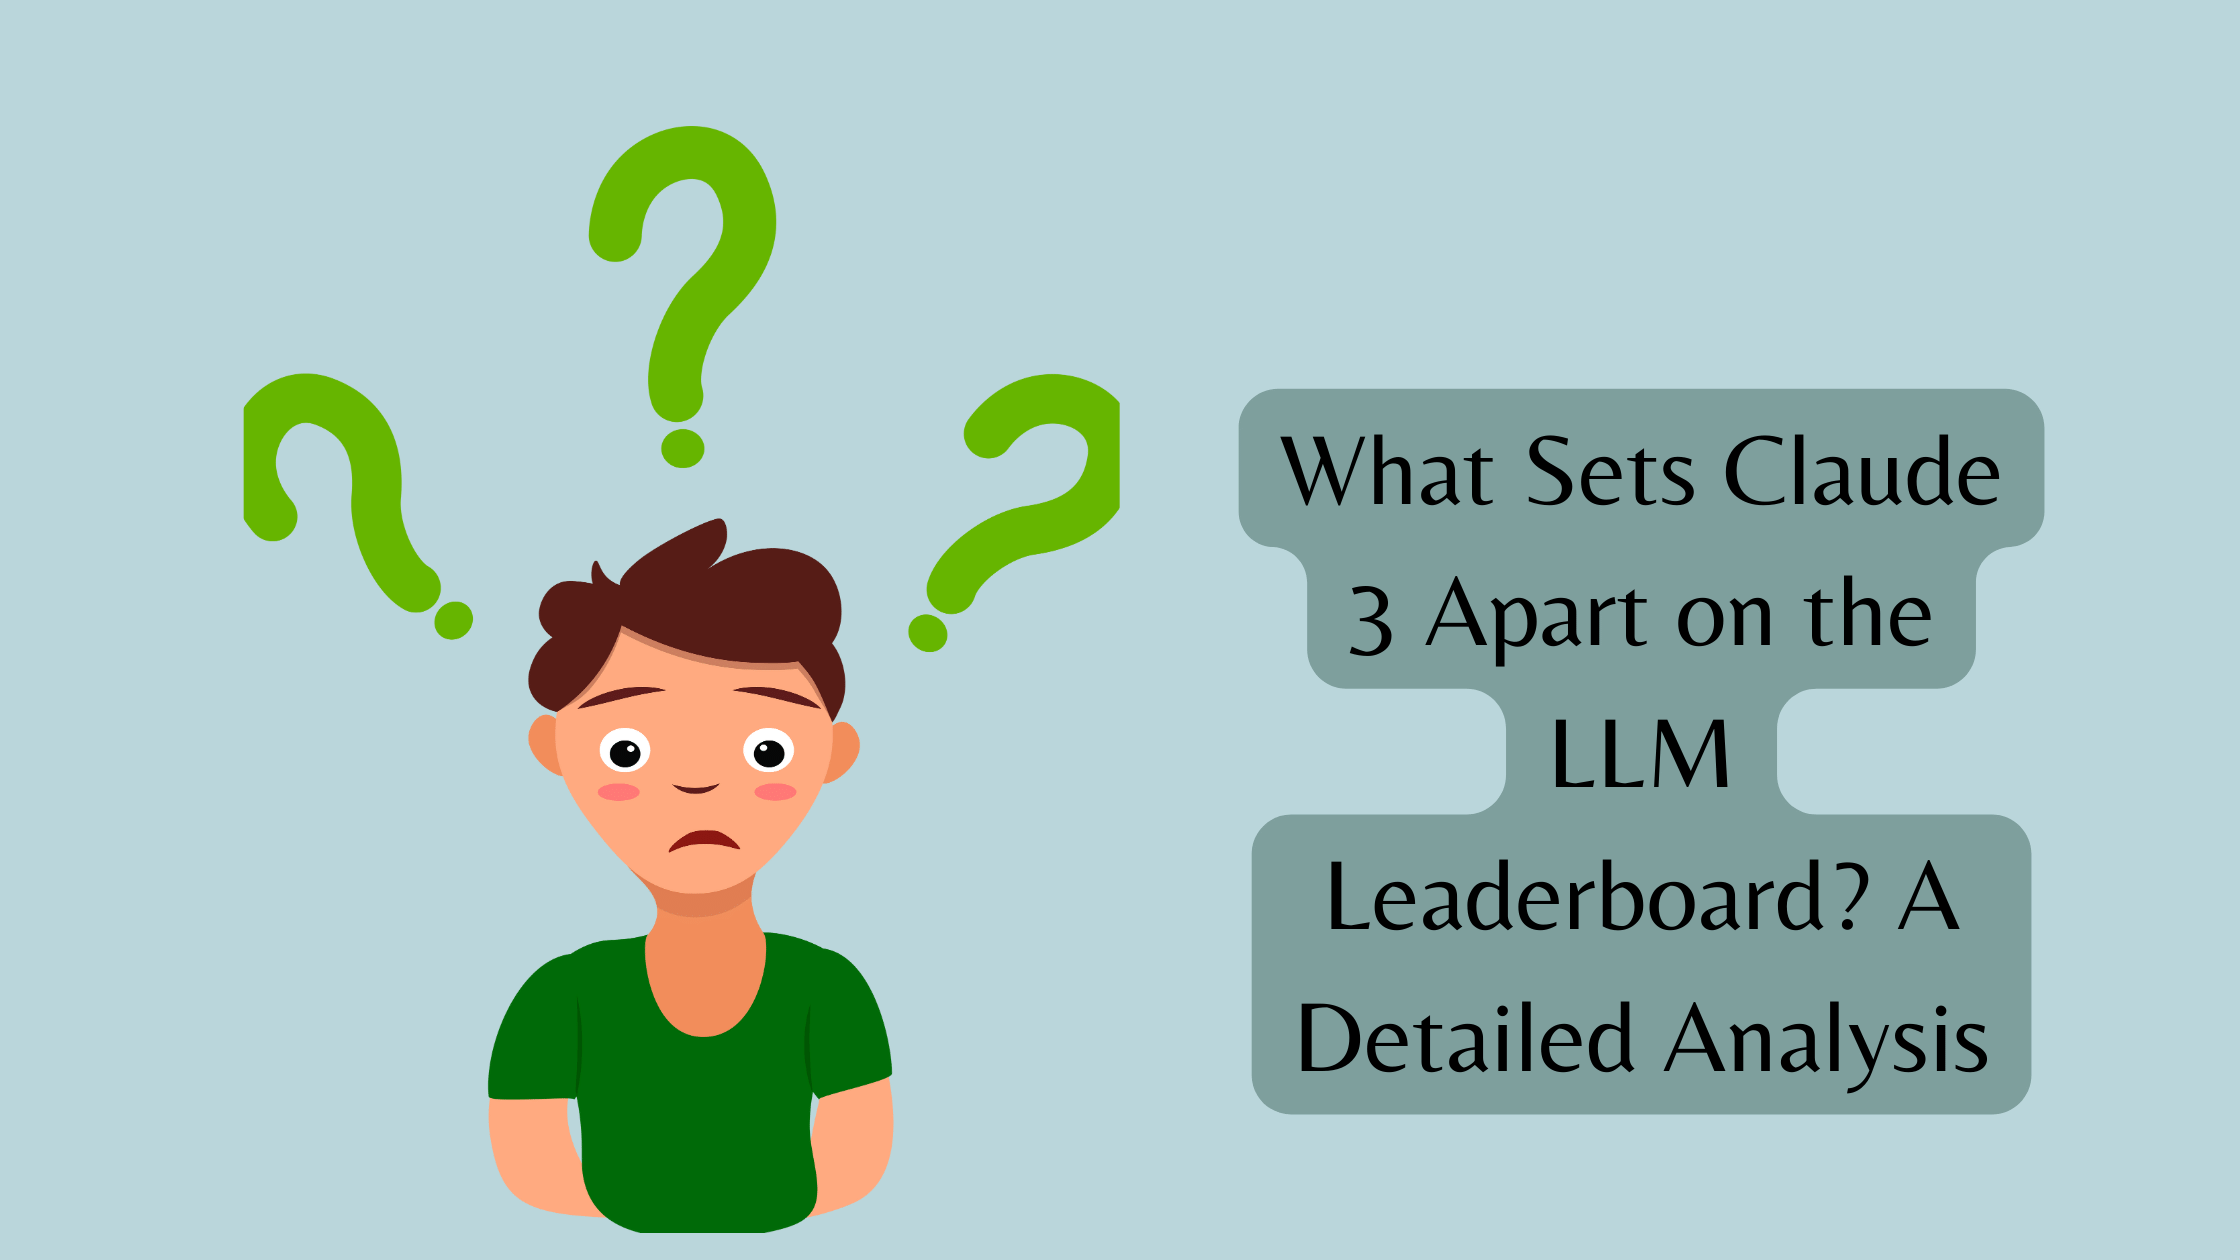 LLM Leaderboard